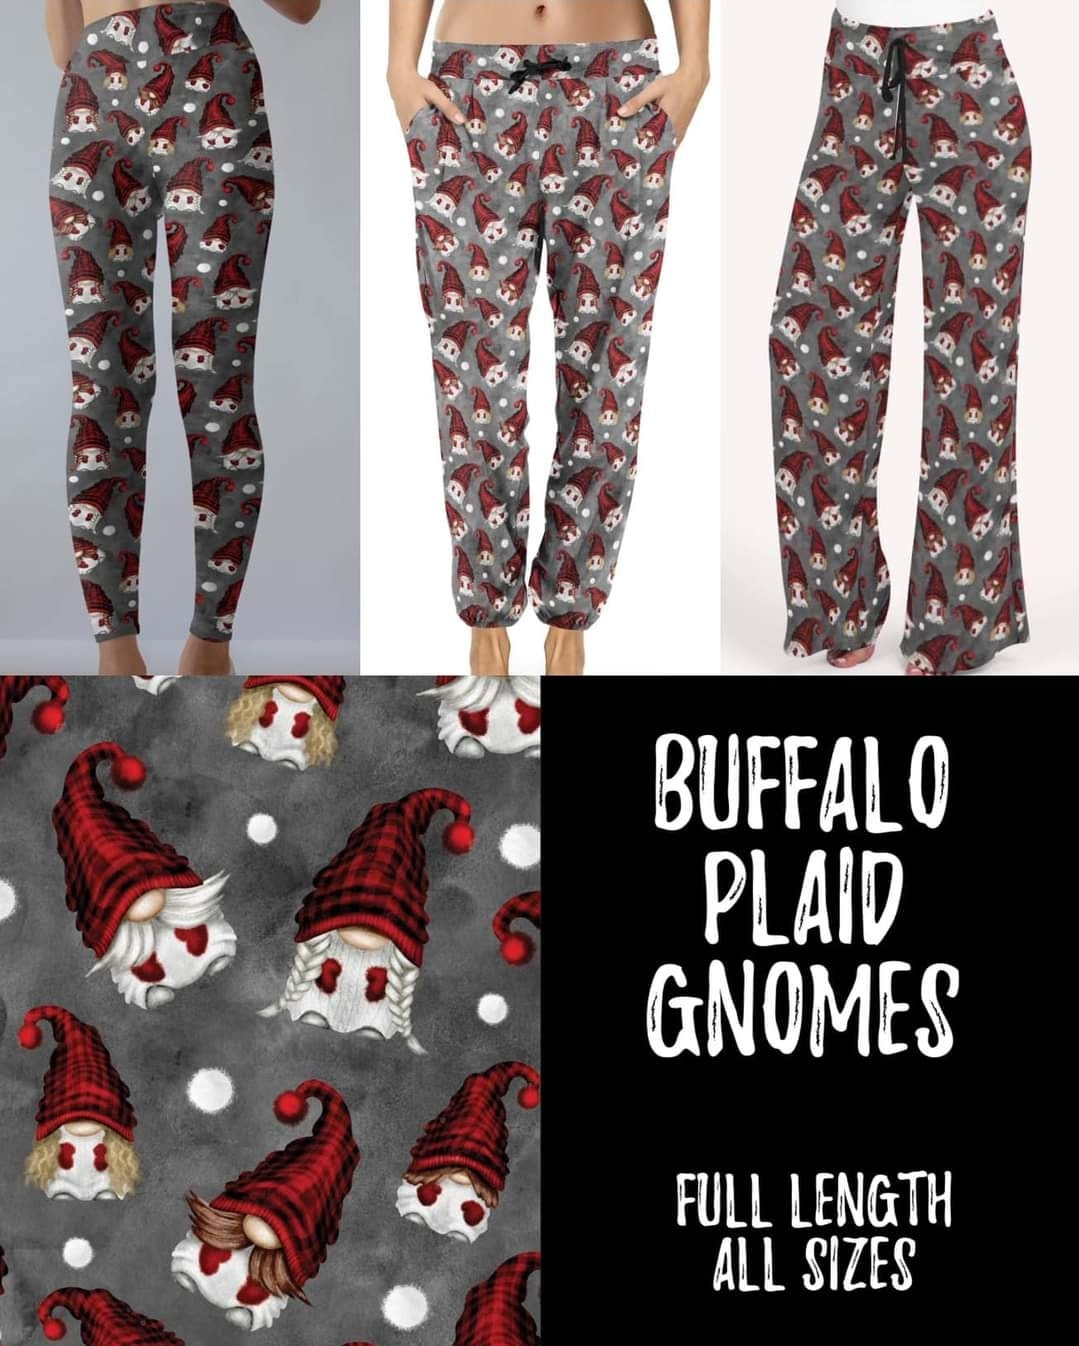 Buffalo plaid gnomes leggings, joggers and lounge pants